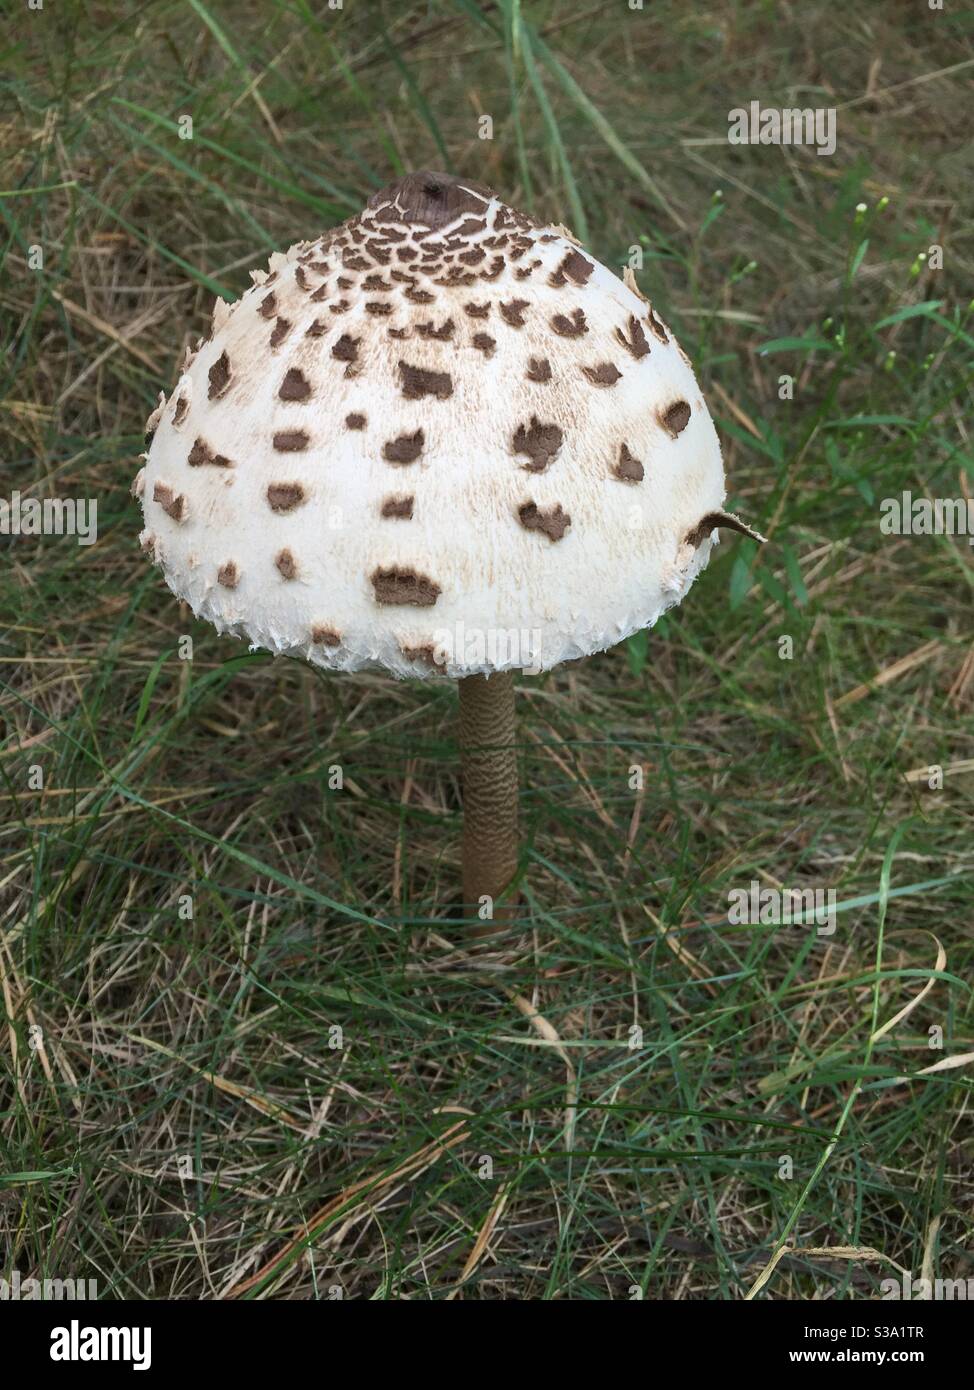 Mushroom, spotted, black, white. Large on grassy, sandy ground in September. Stock Photo